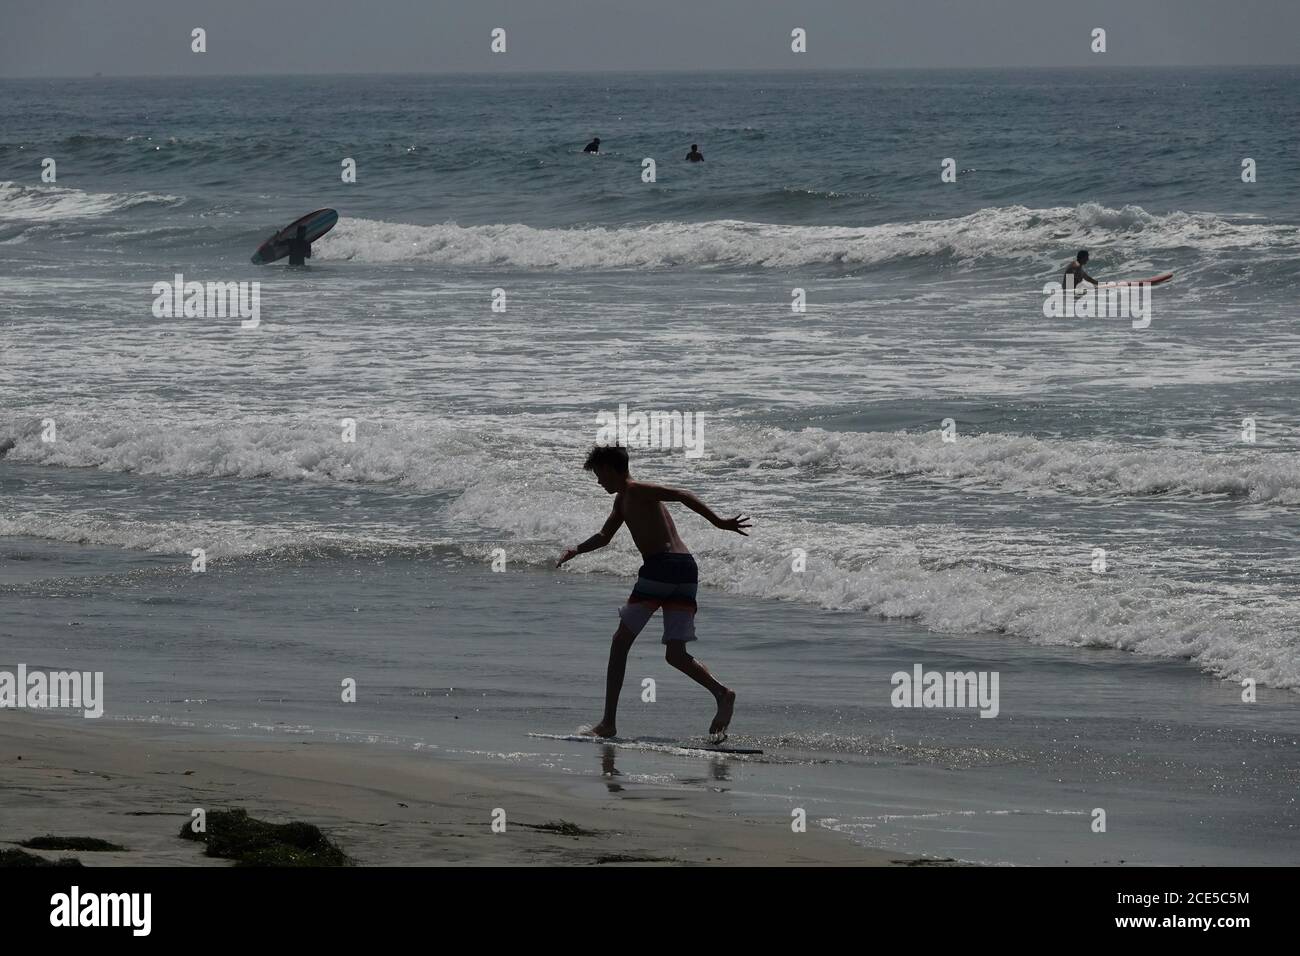 A silhouette of a boy skim boarding near the oceans edge on the beach. Stock Photo